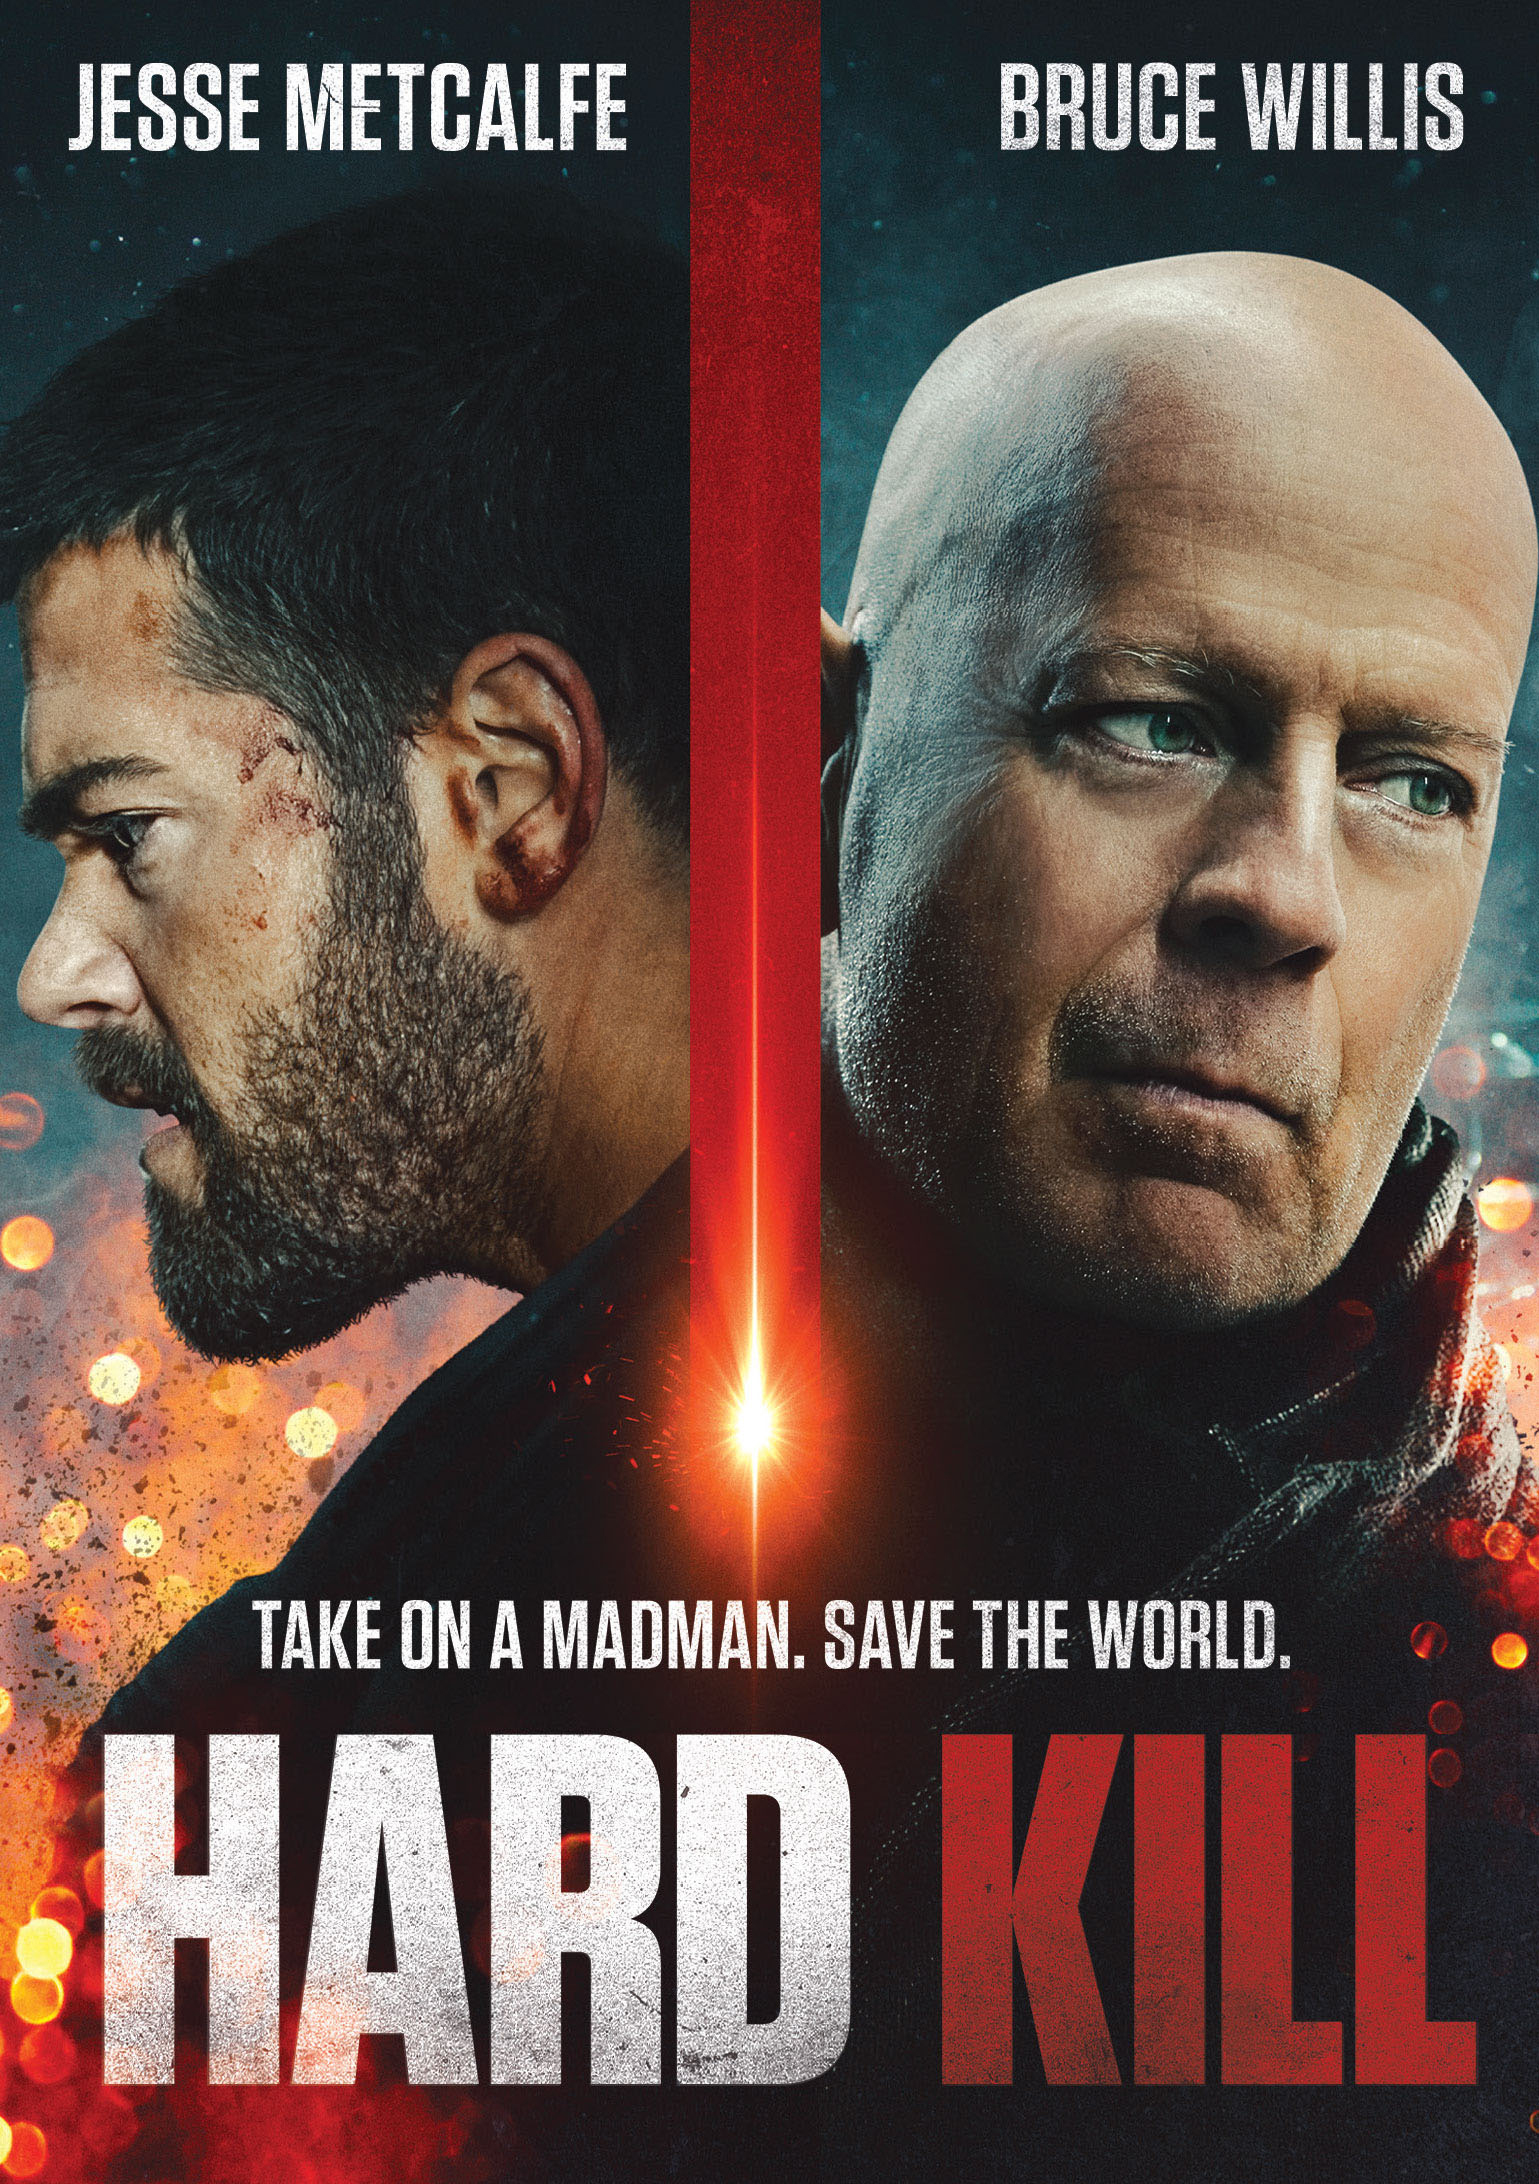 Hard Kill [DVD] [2020]